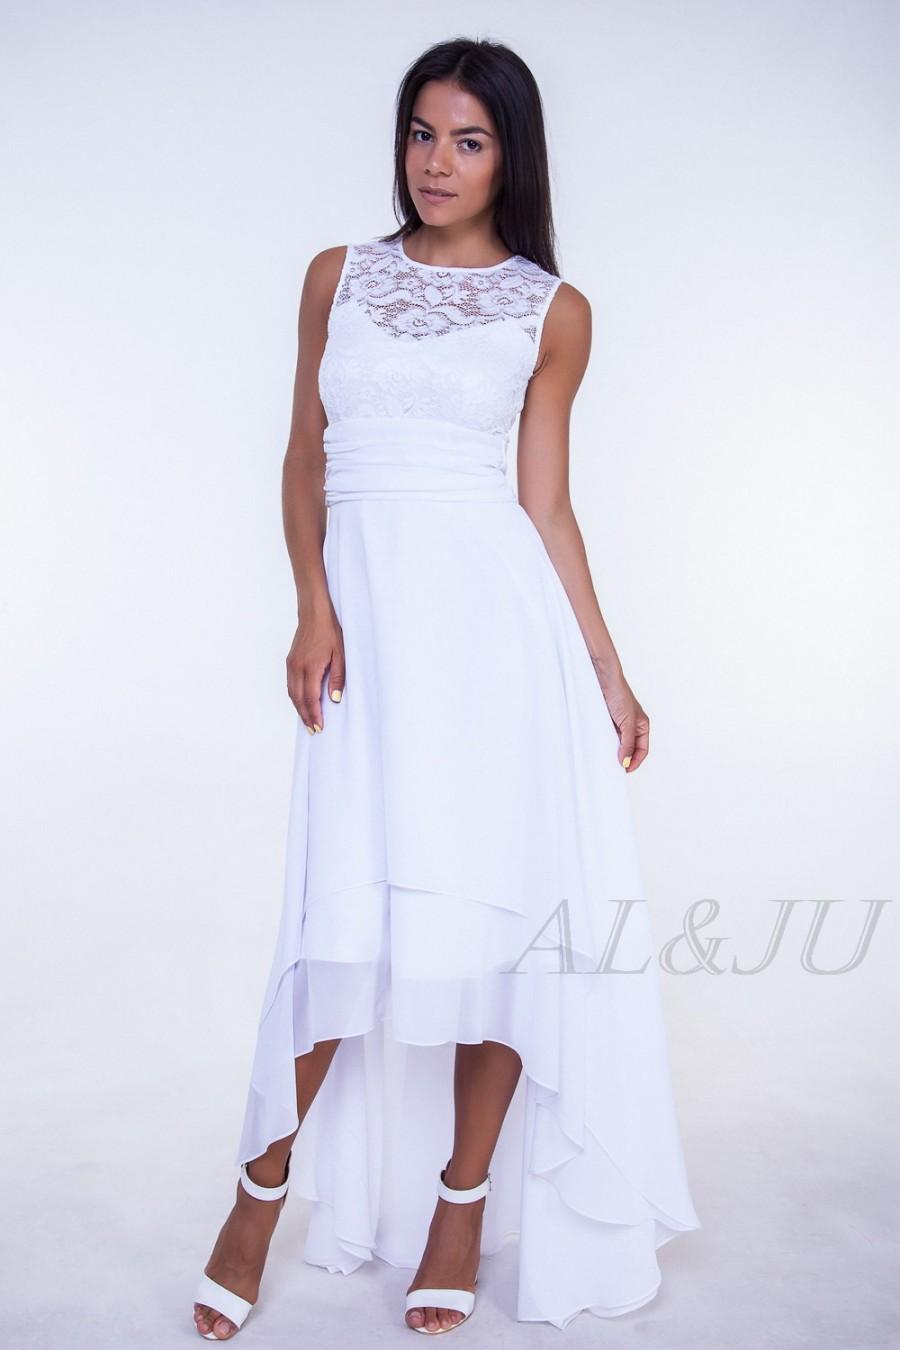 Wedding - Long white dress Wedding lace and chiffon gown Long dress bridesmaid.